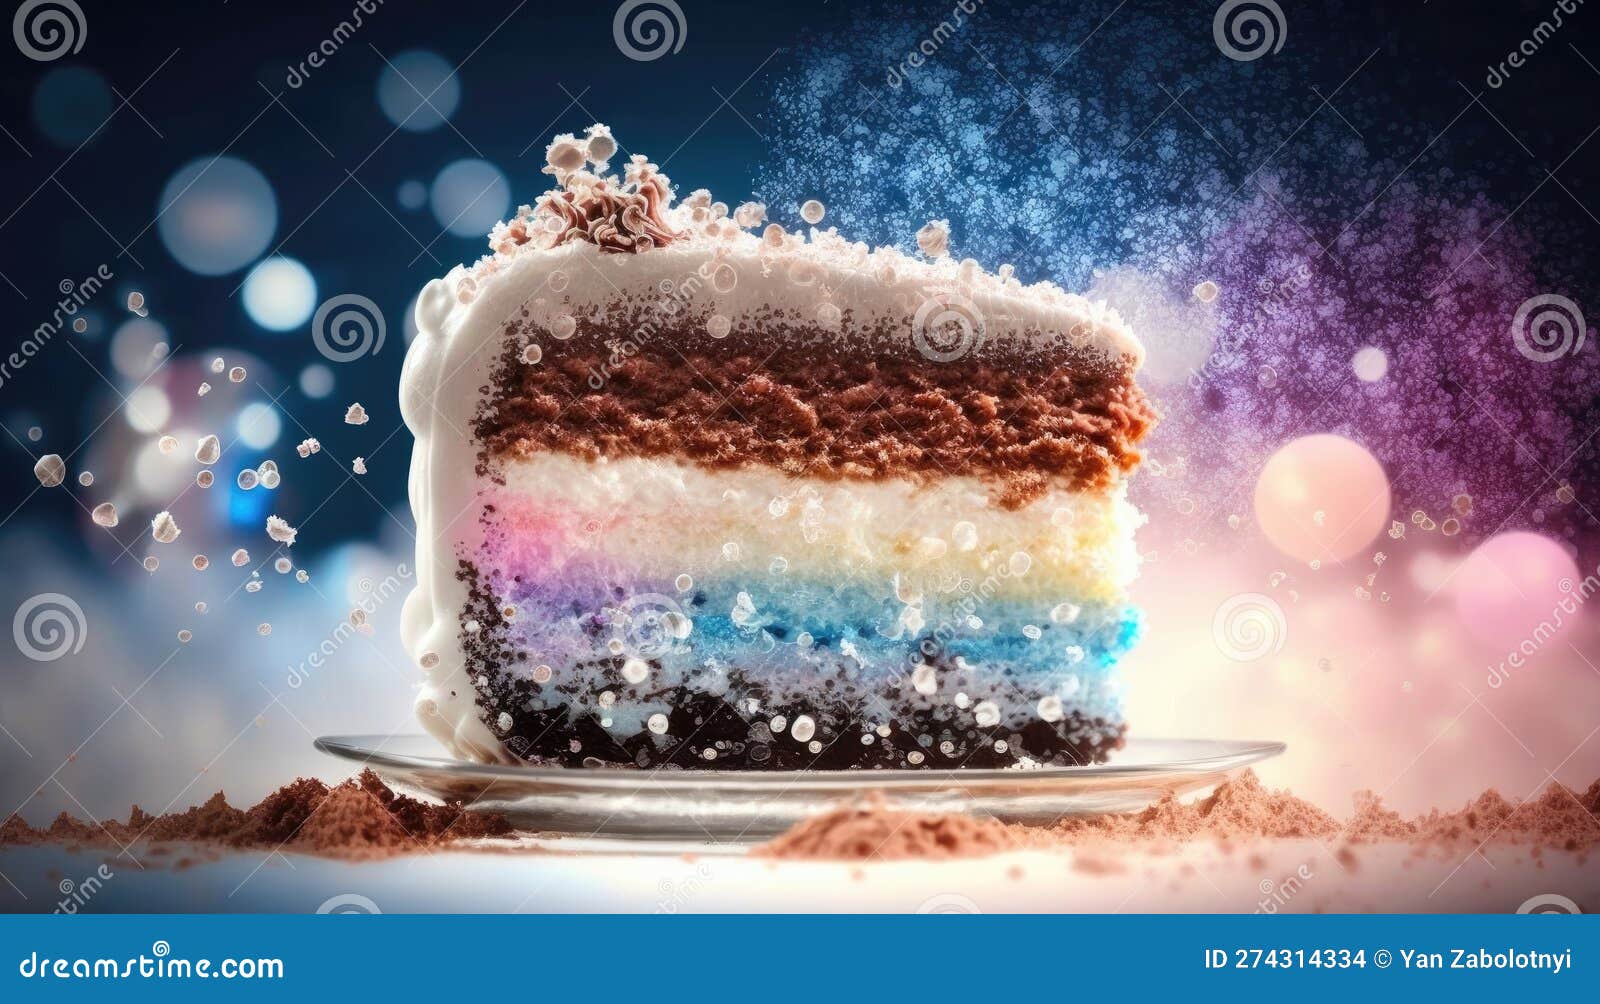 Majestic Galaxy - Macaron Galaxy Cake • Fantasy Cakes • Creme Maison Bakery  Singapore